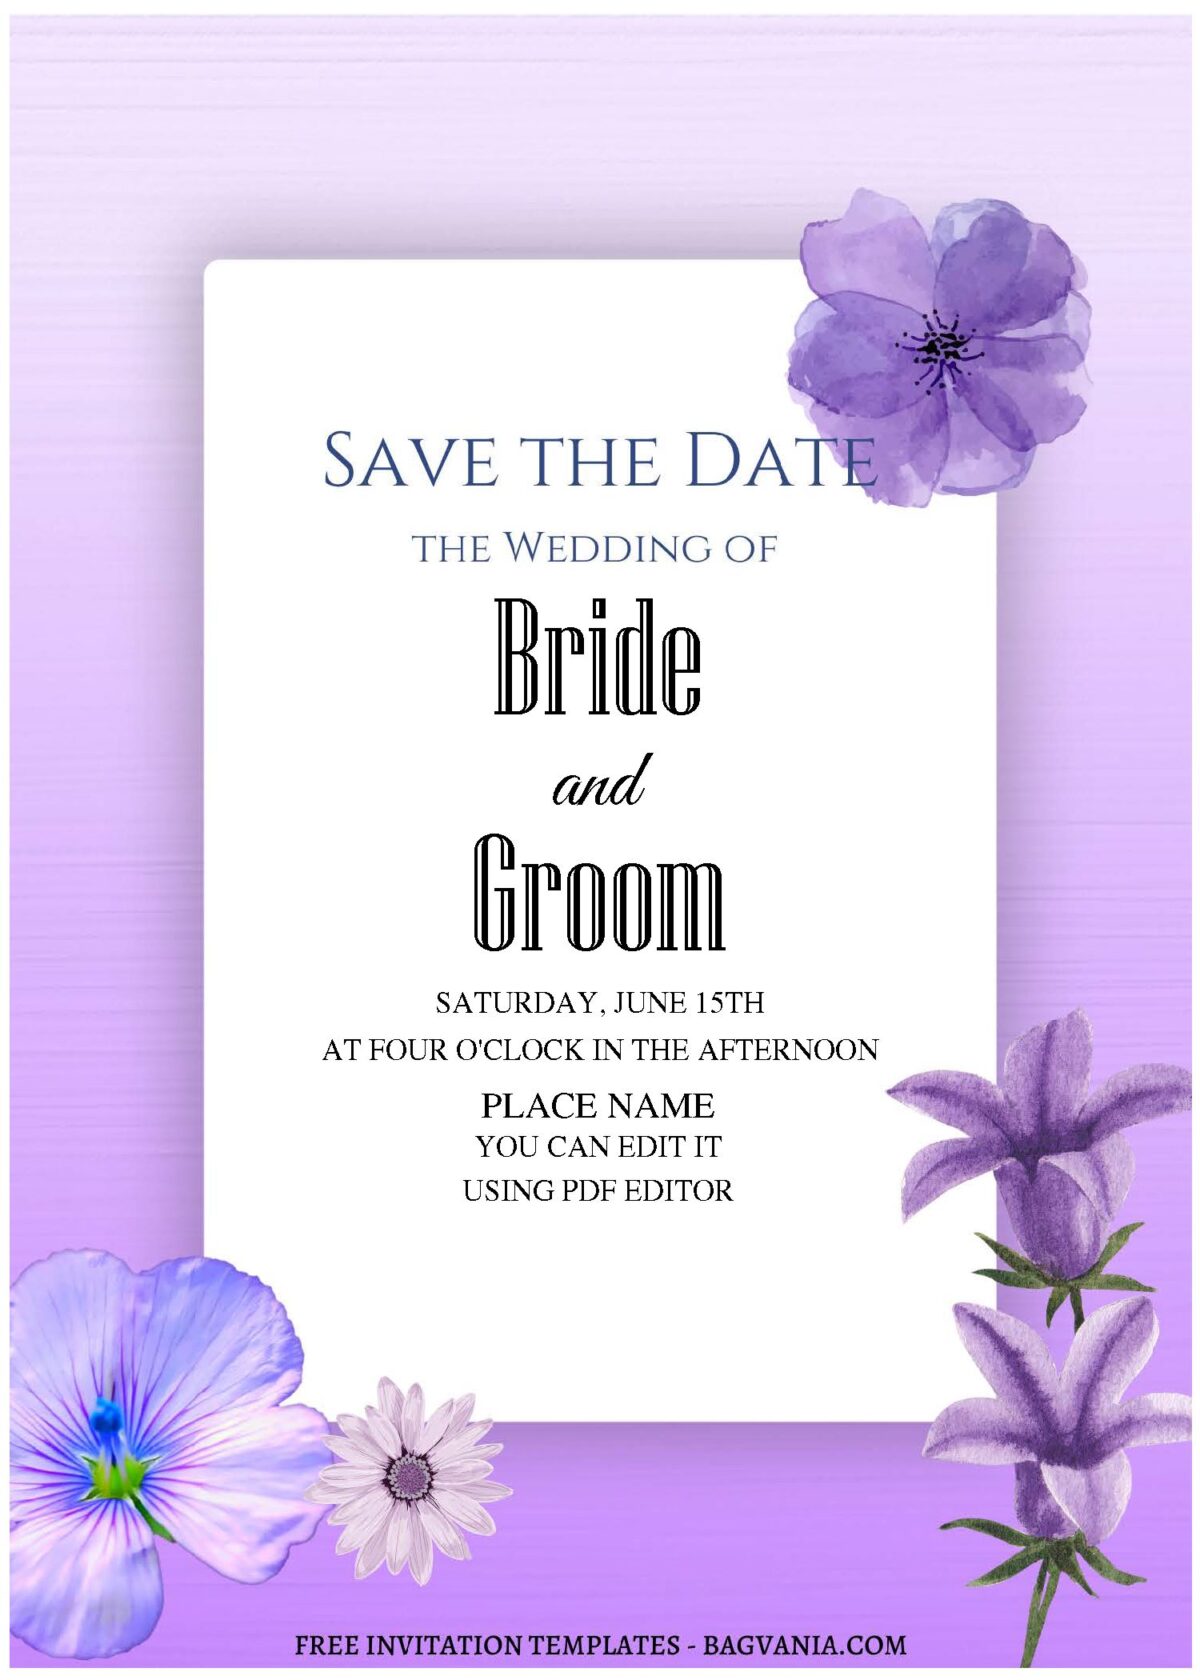 (Free Editable PDF) Dreamy Purple Flowers Wedding Invitation Templates with poppy and salvias flowers